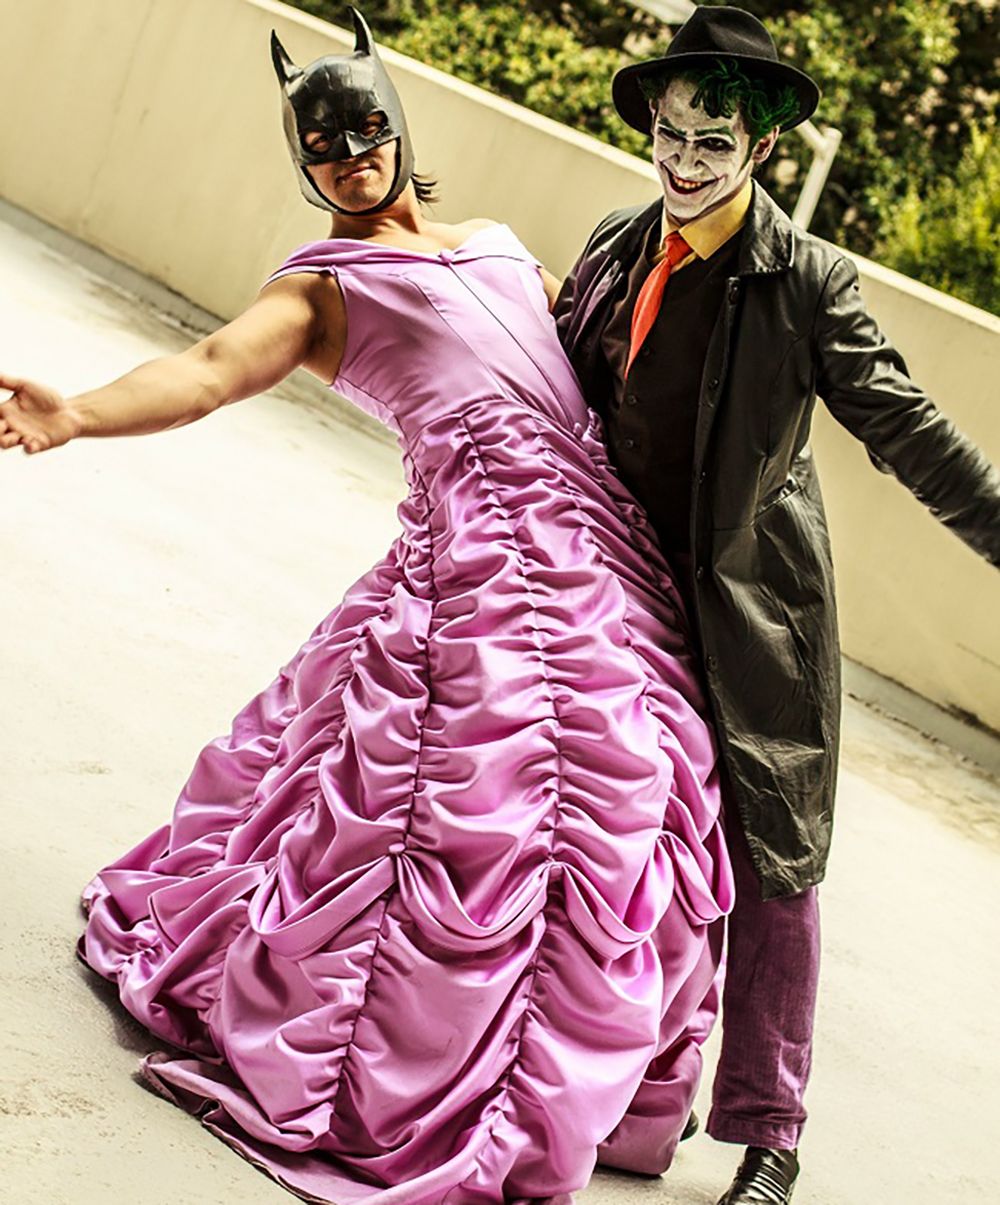 Disney Princess Batman Cosplay with Joker